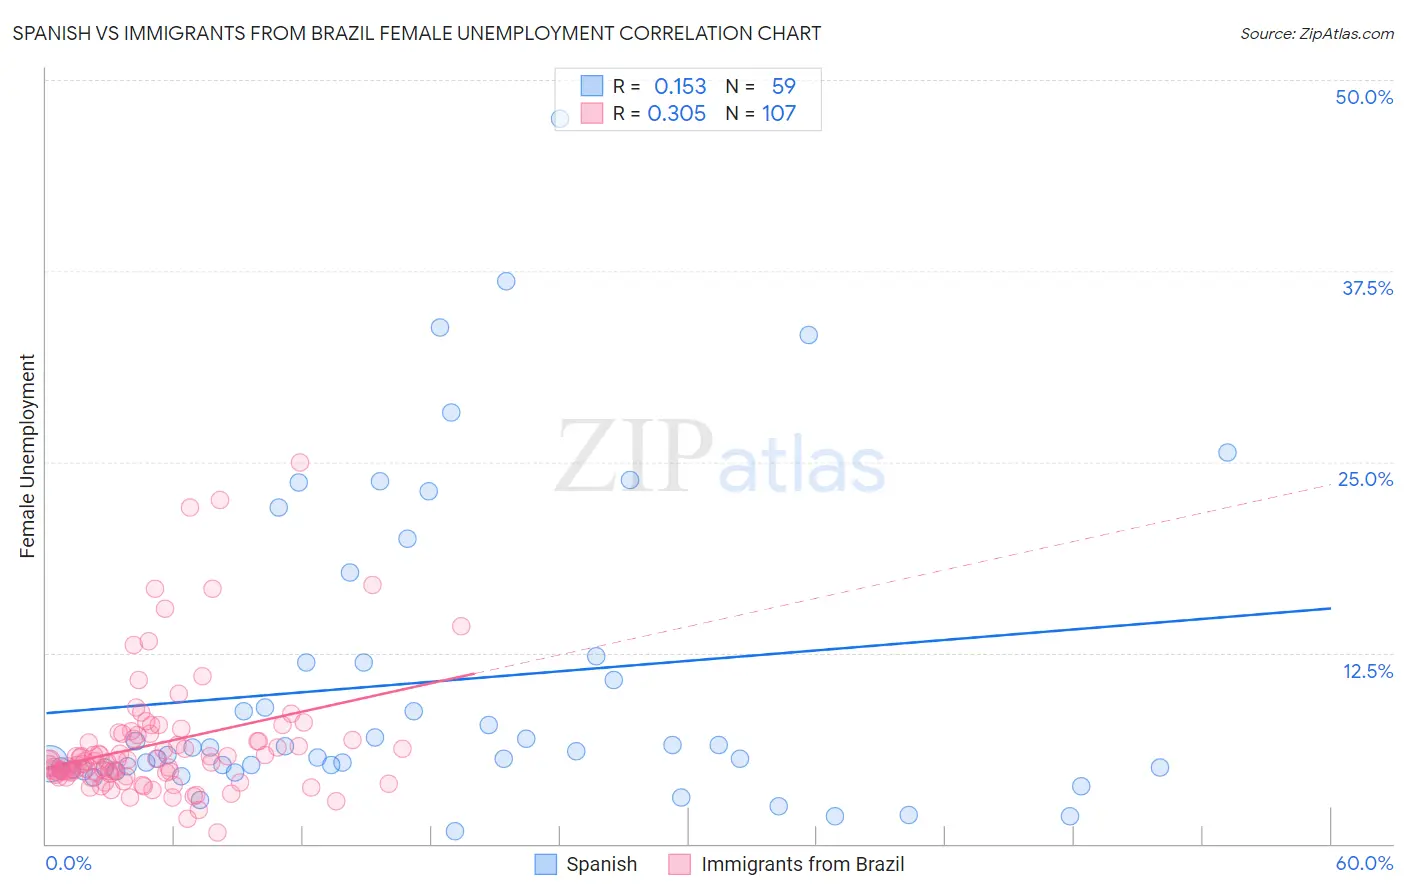 Spanish vs Immigrants from Brazil Female Unemployment